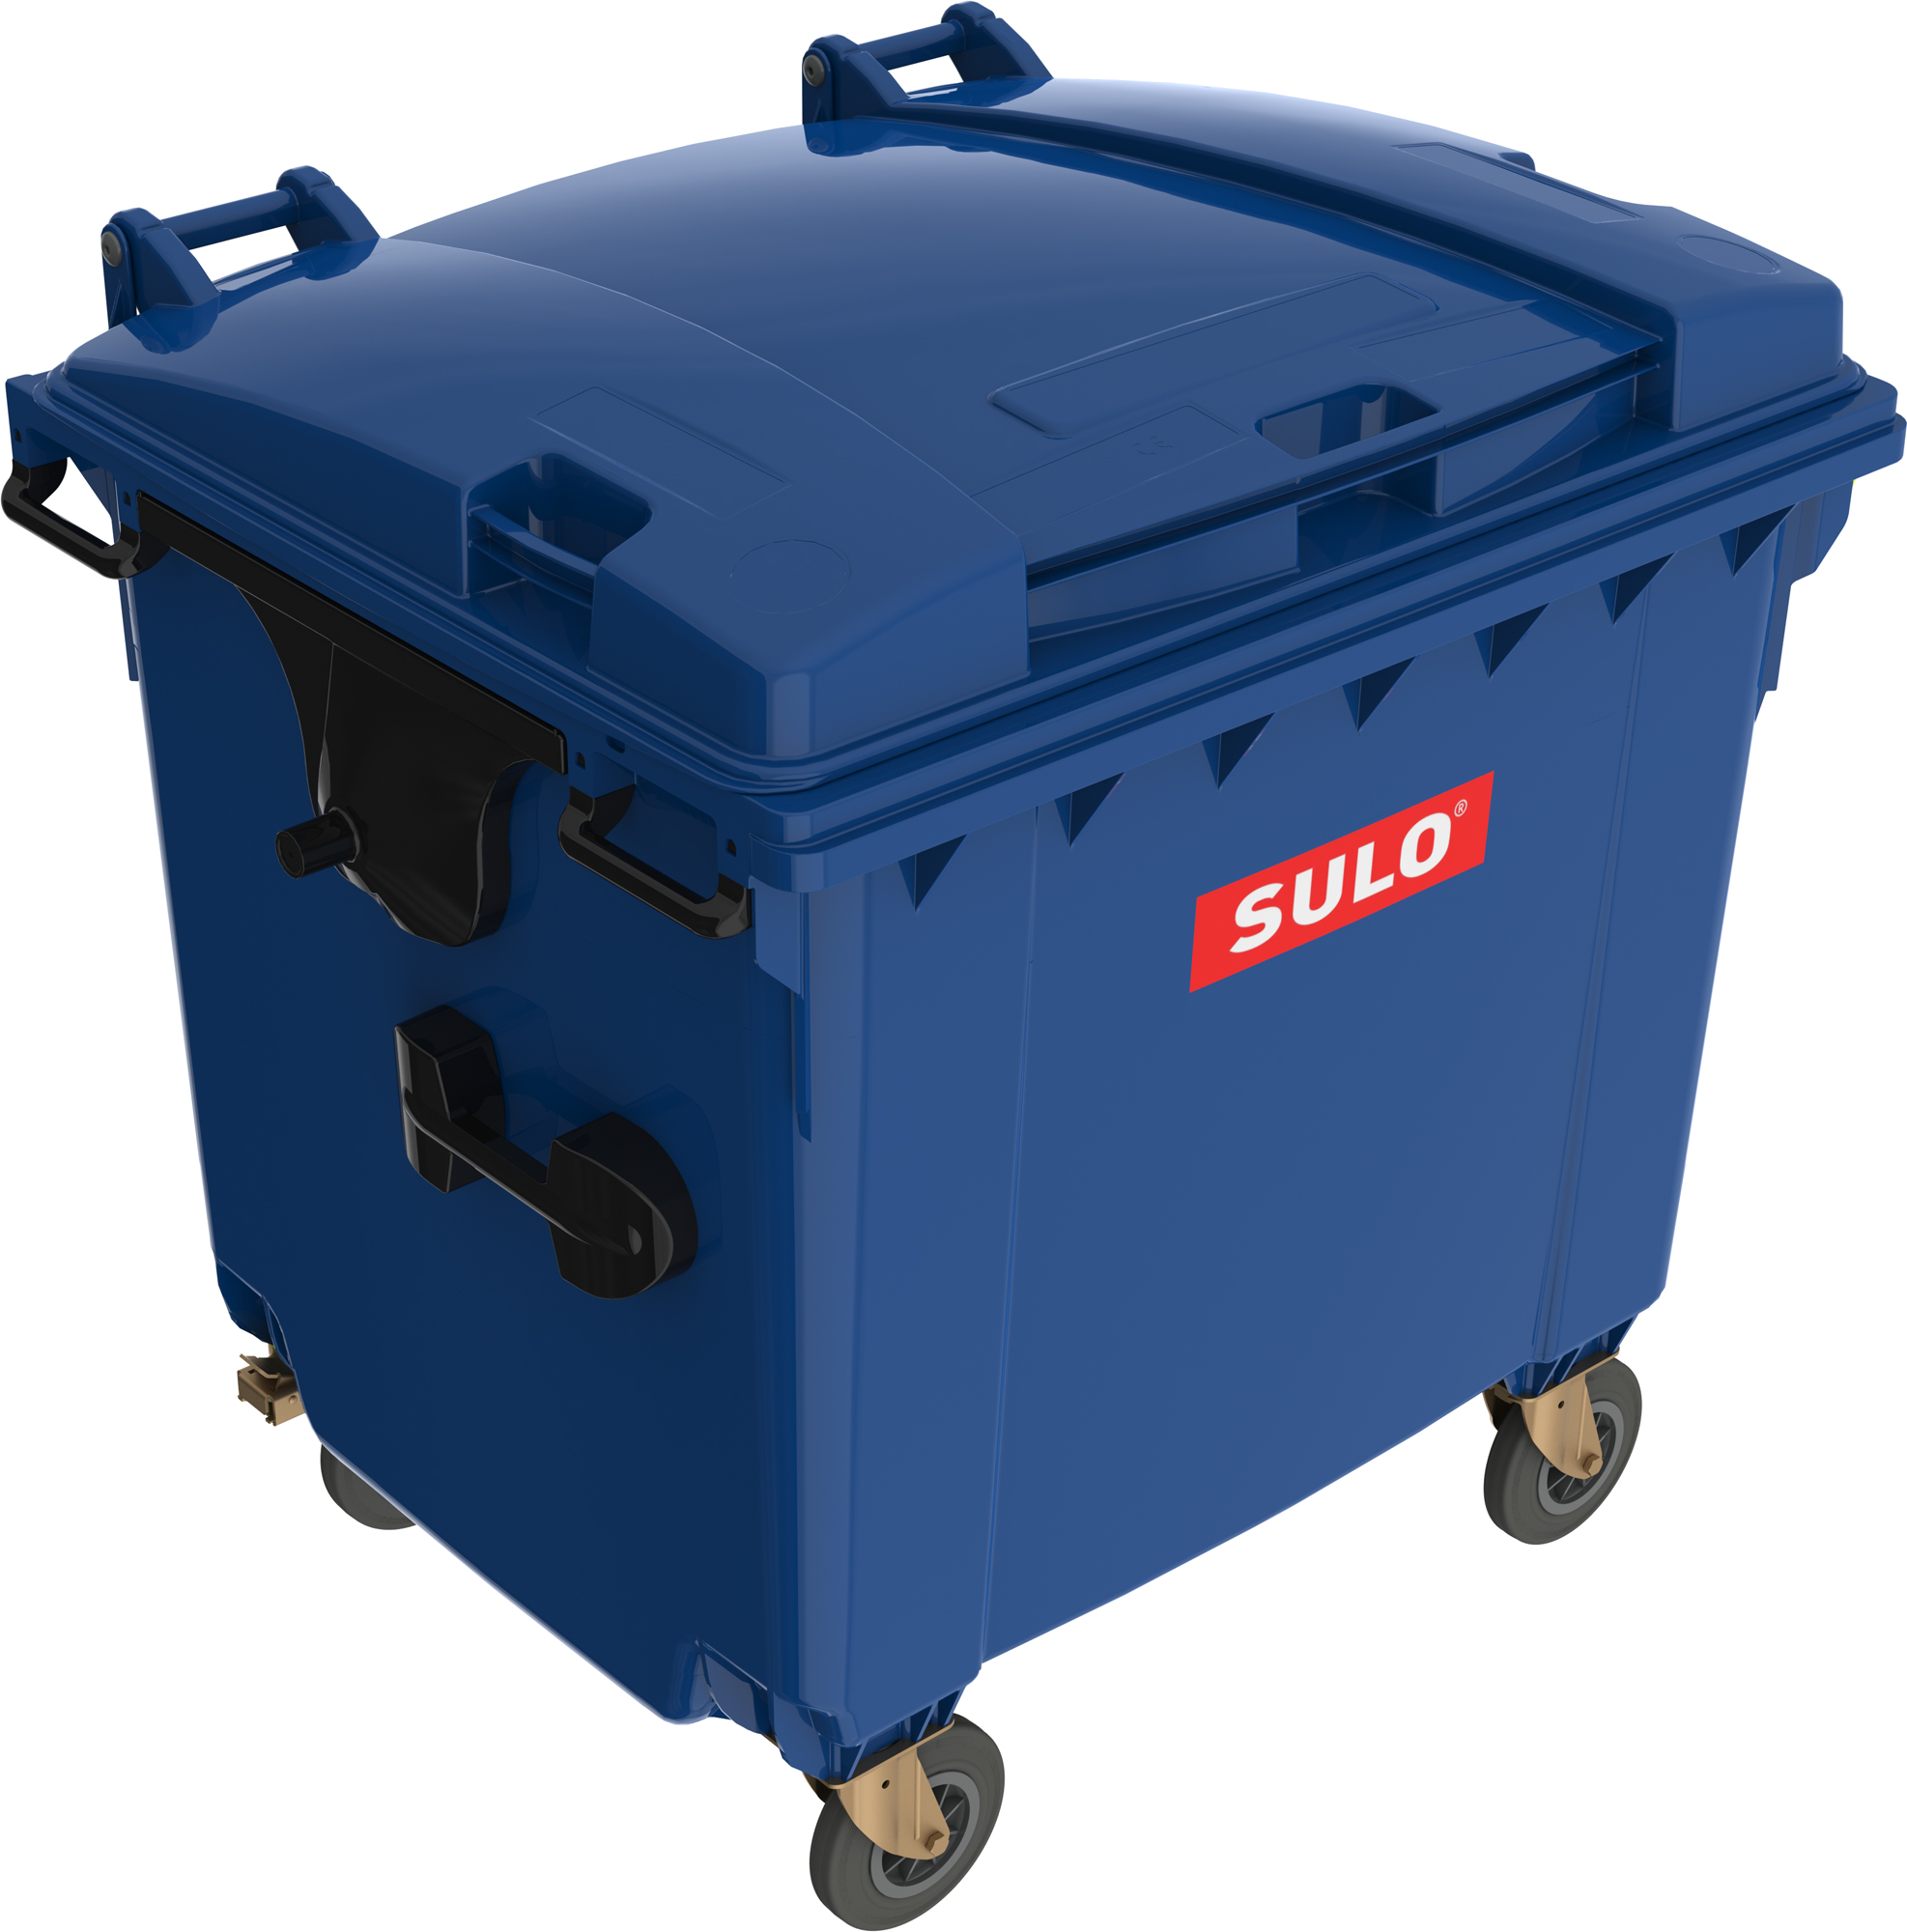 Eurocontainer albastru din material plastic cu capac plat SULO 1100 L – Transport Inclus 1100